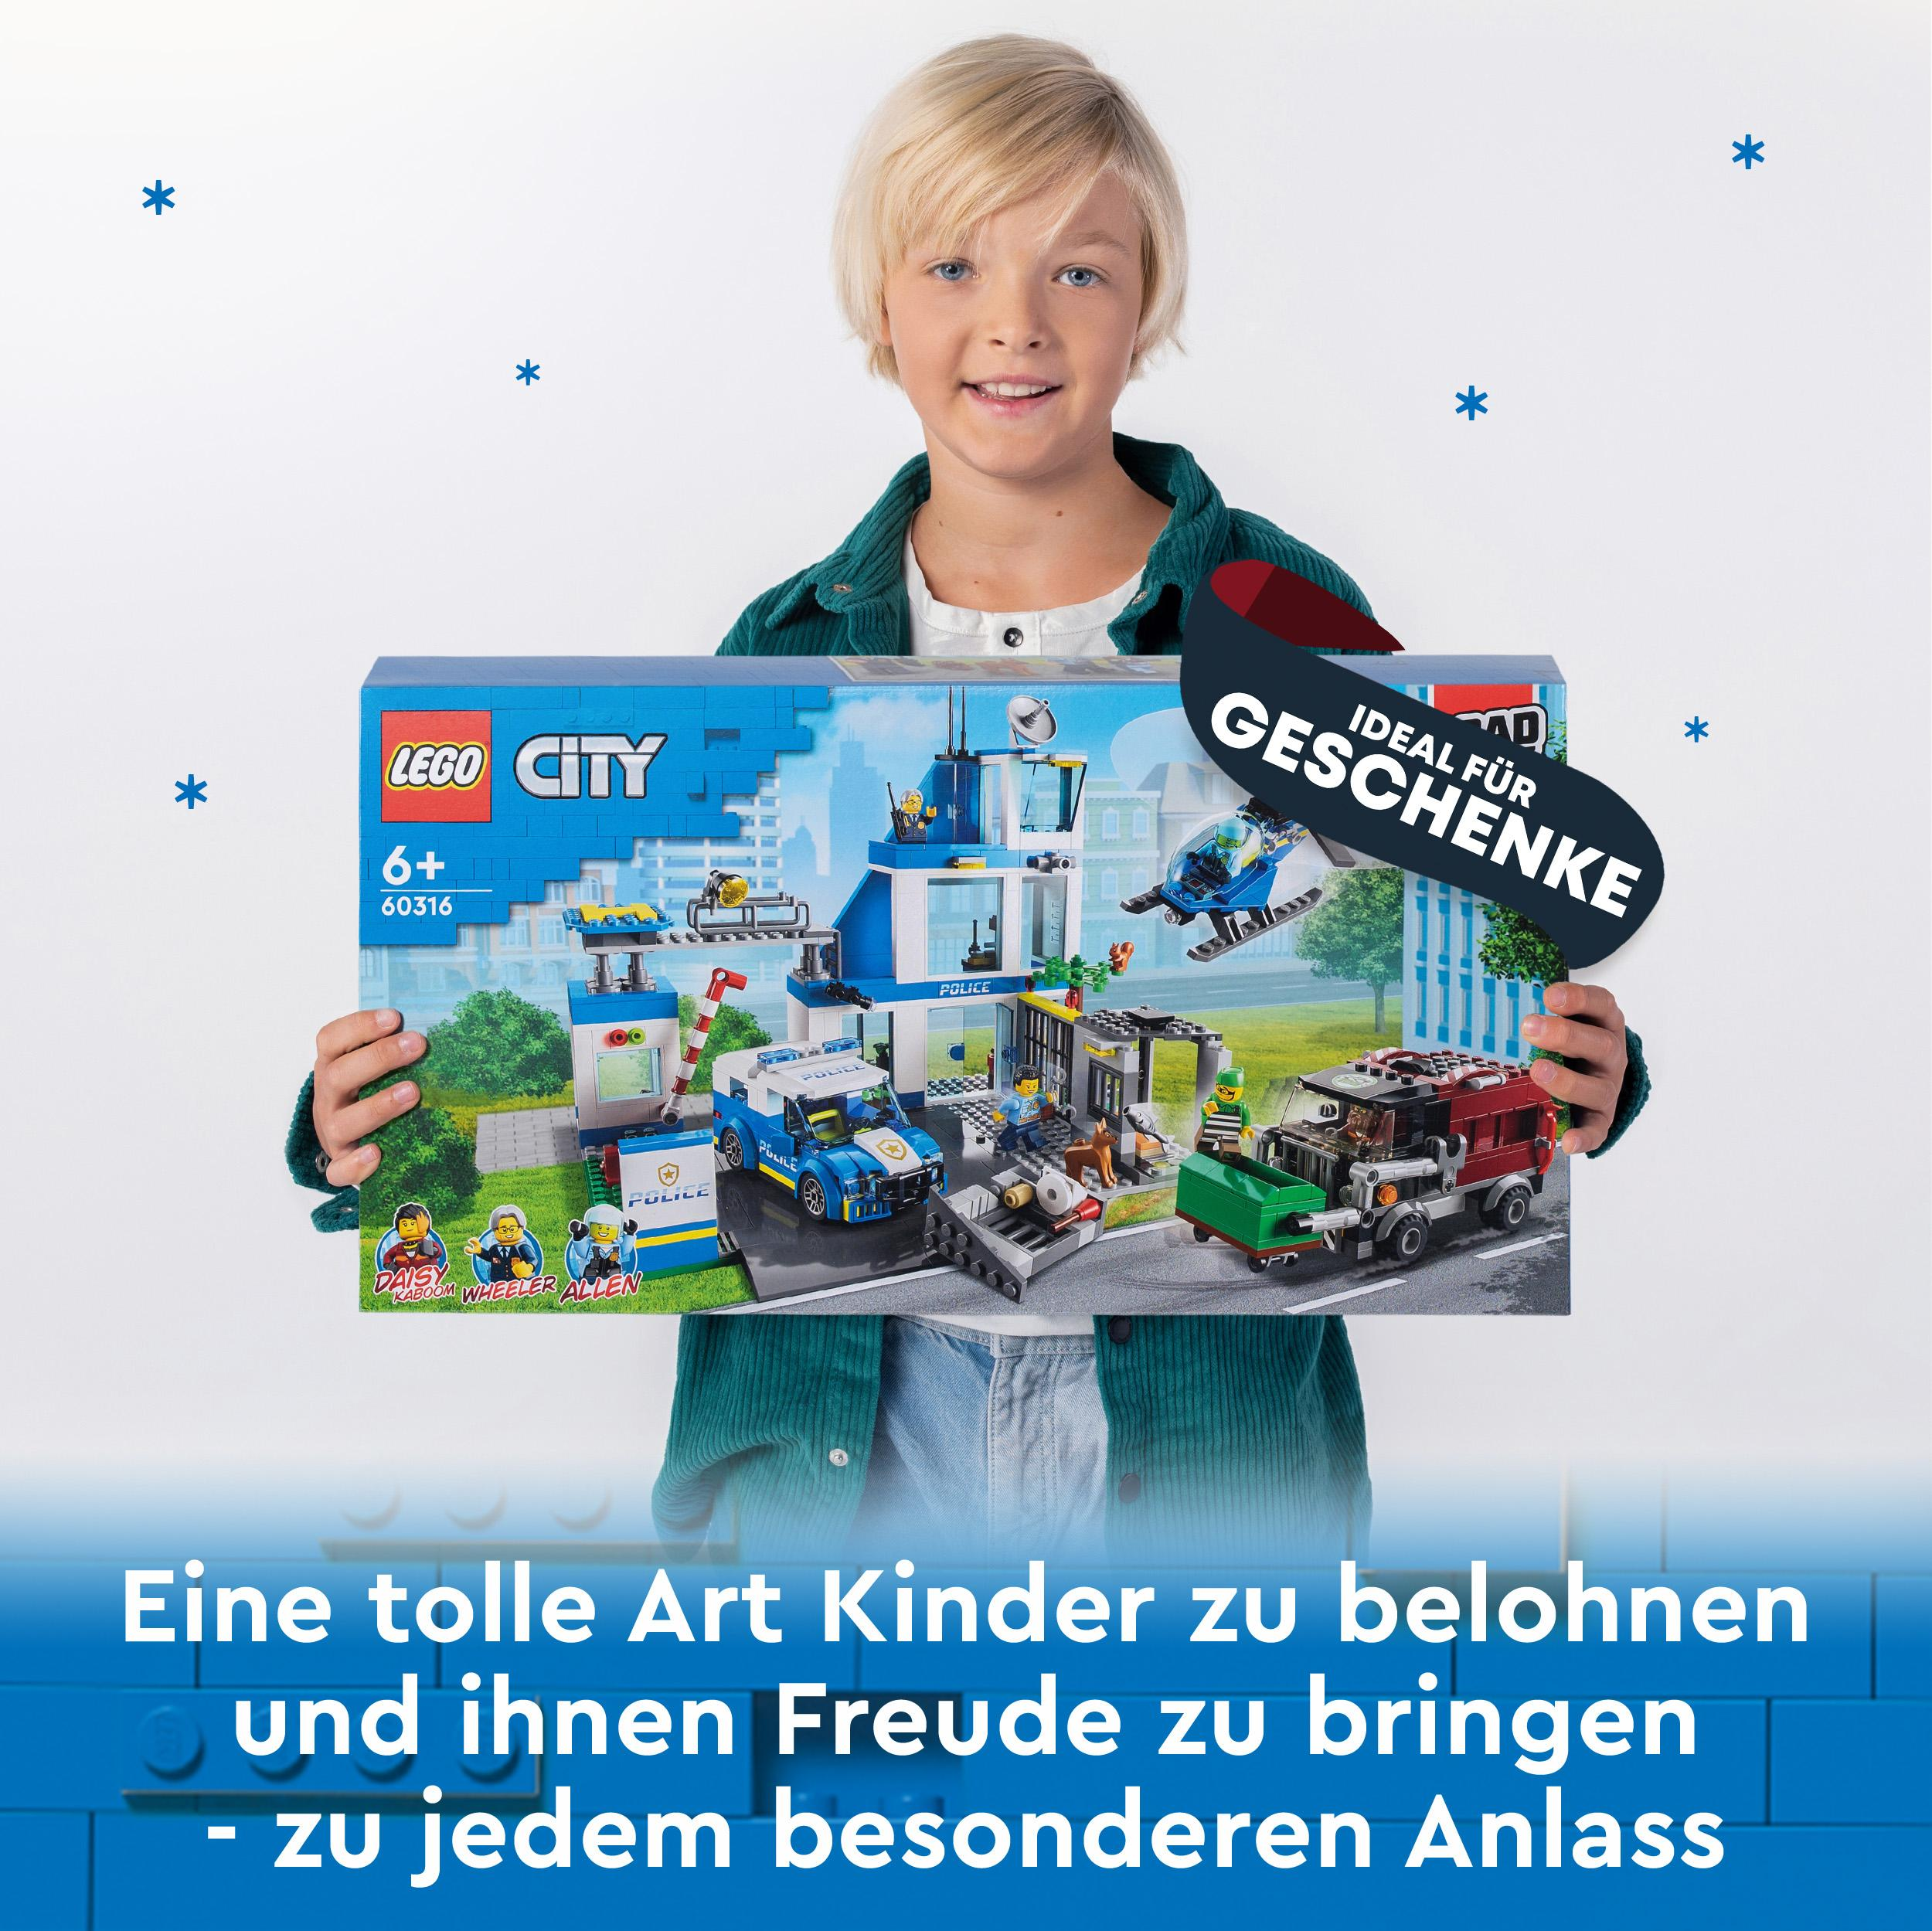 City 60316 Mehrfarbig Polizeistation LEGO Bausatz,